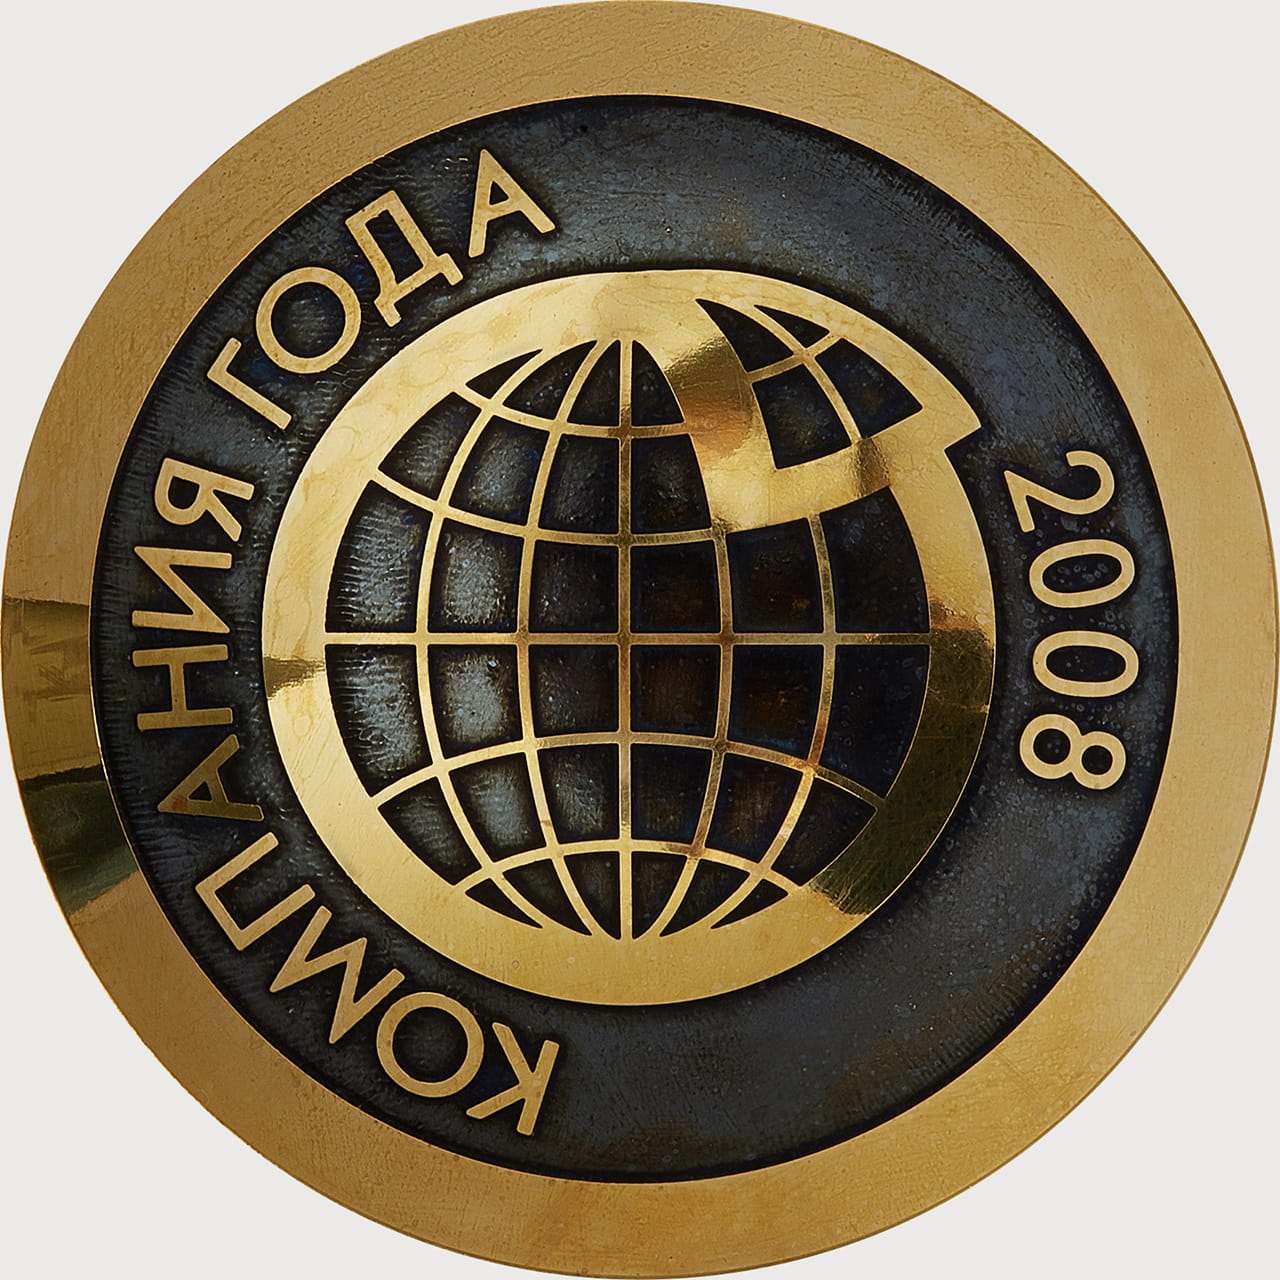 
National award «Company of the year – 2008»
